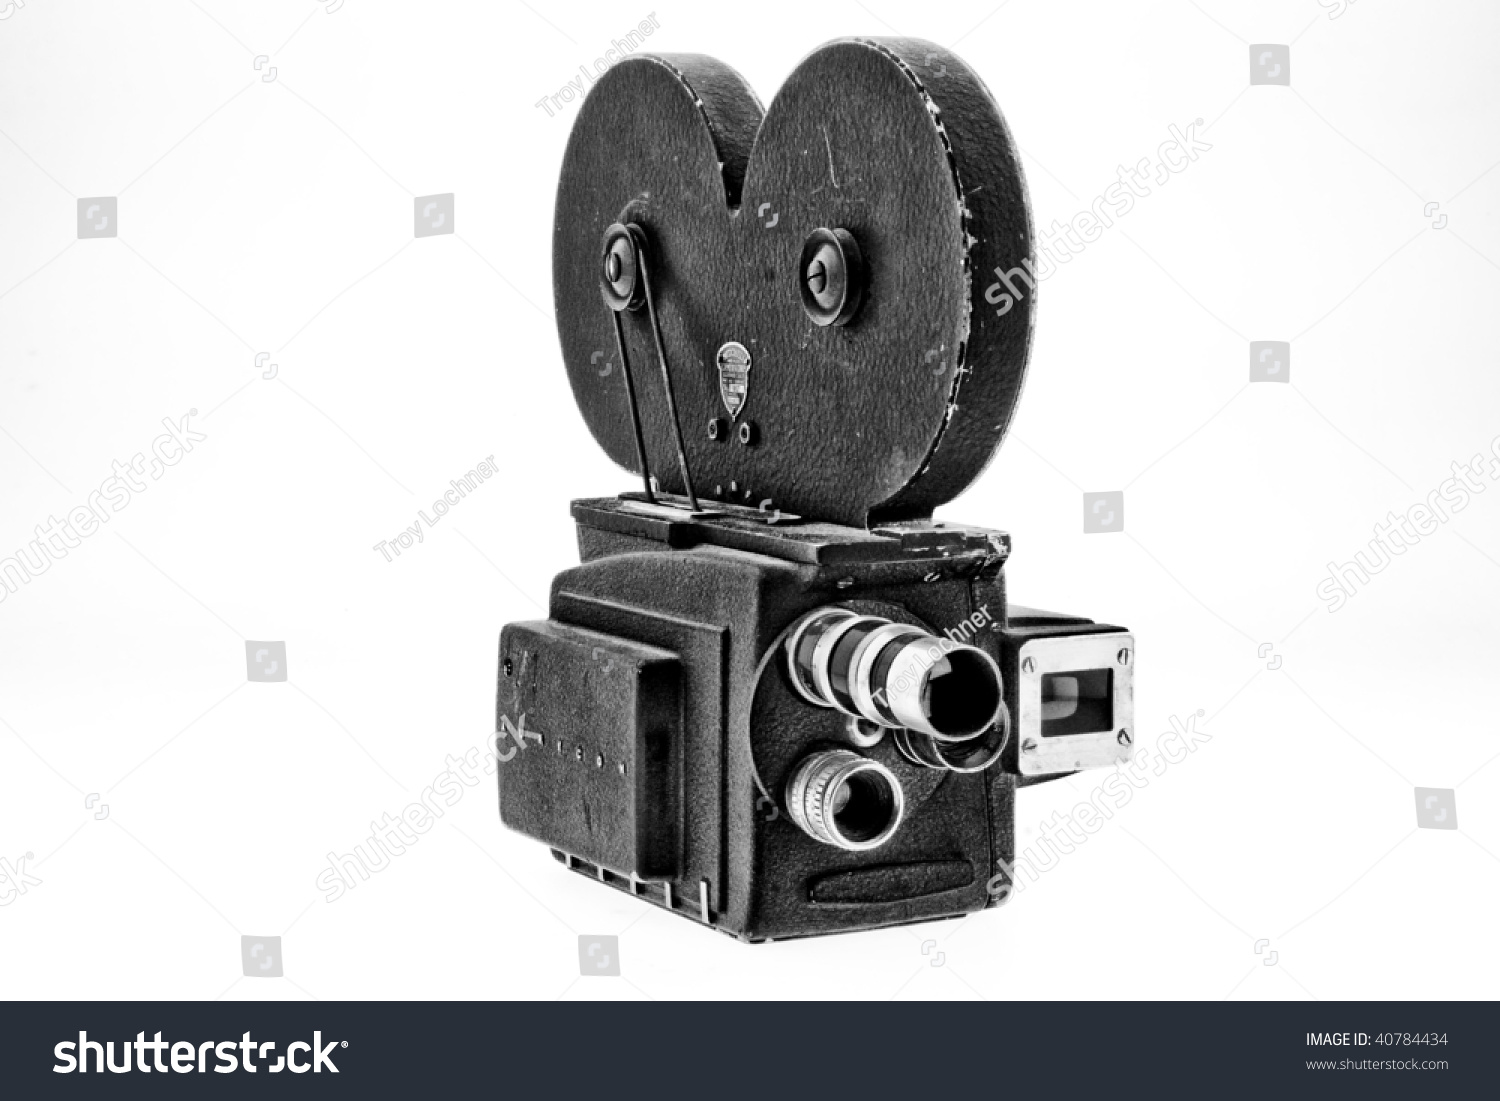 movie camera images